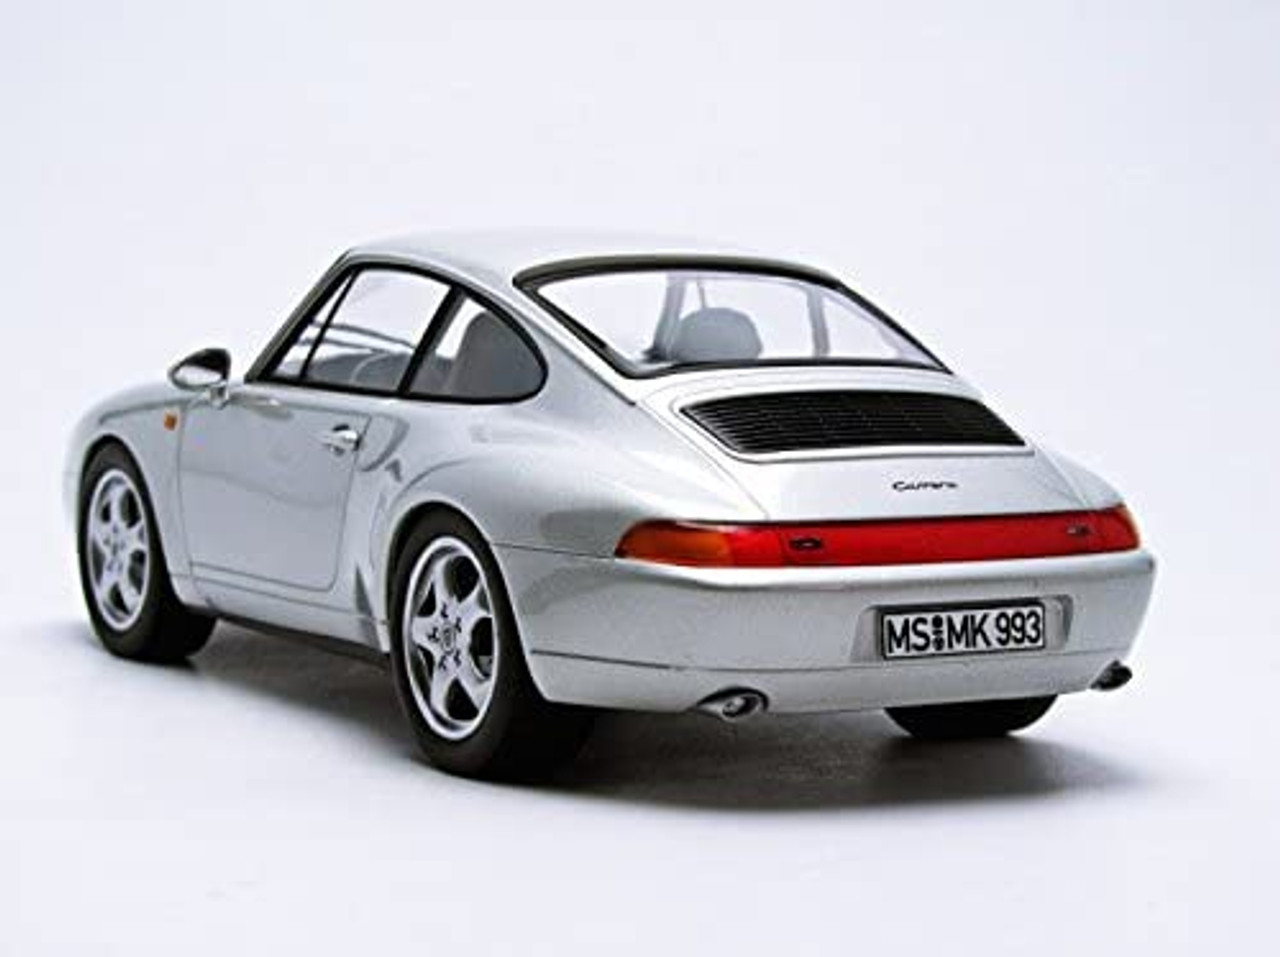 1/18 Norev Porsche 911 Carrera 993 (Silver) Diecast Car Model